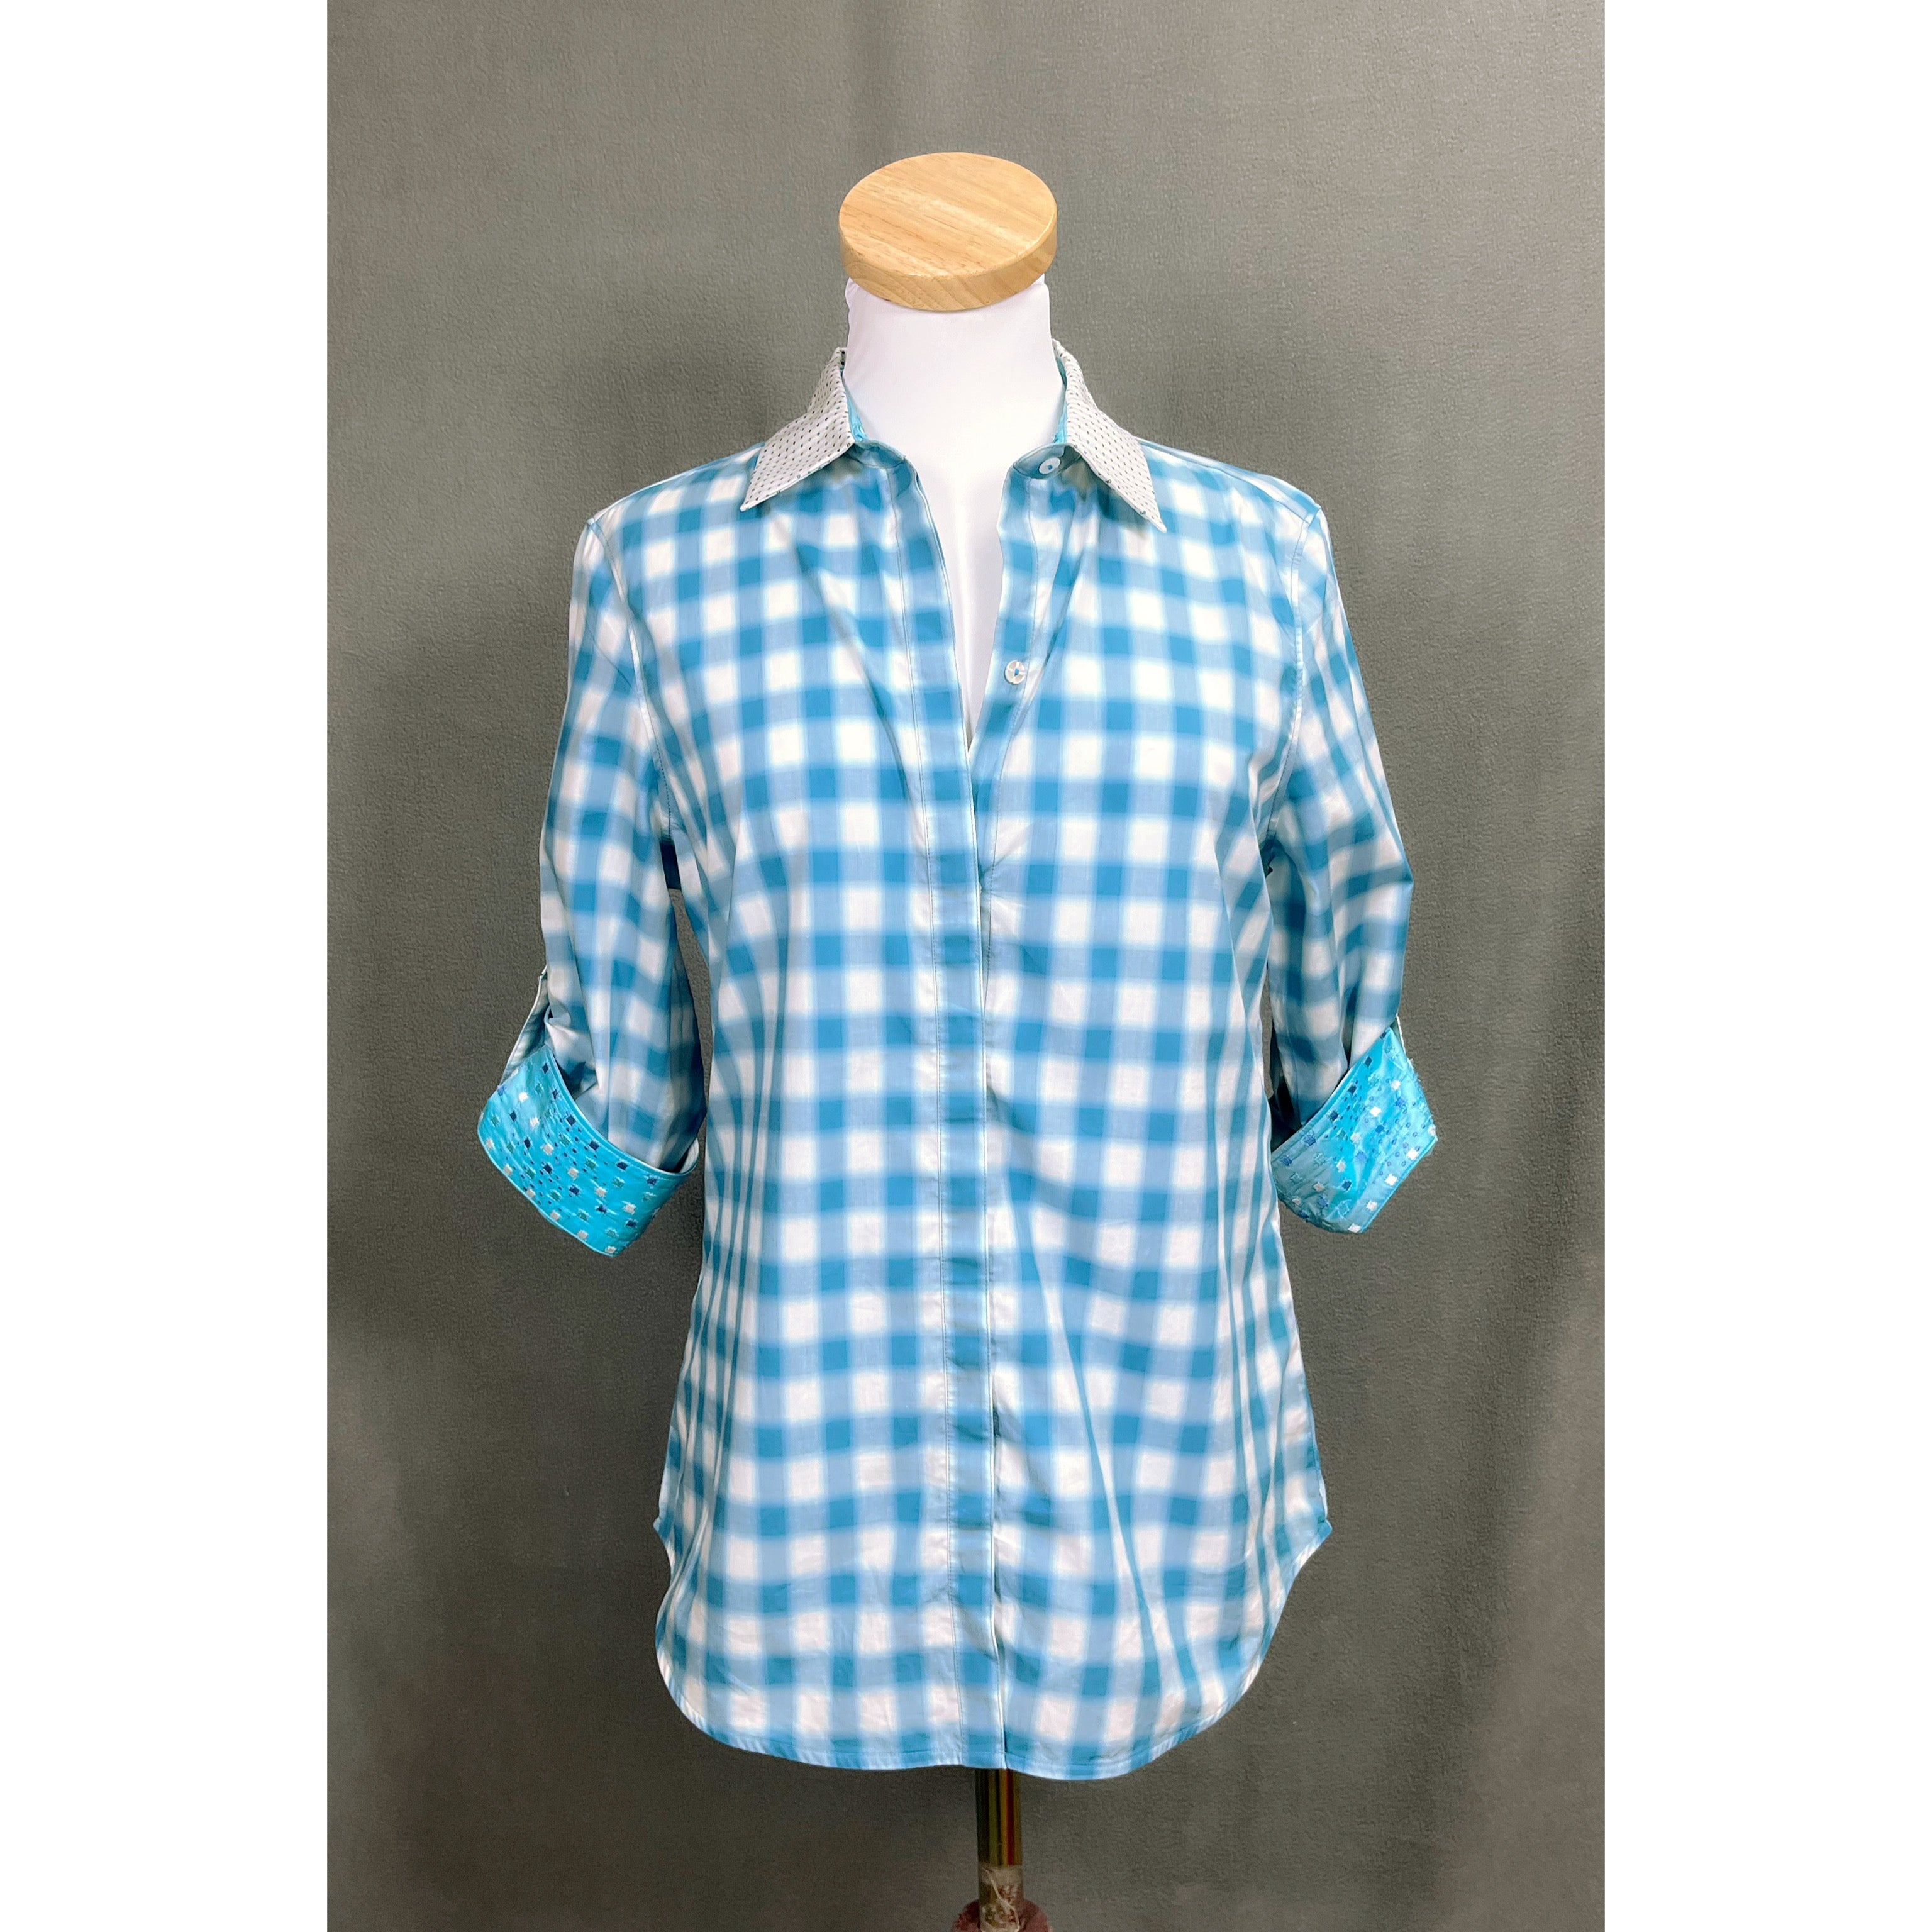 Robert Graham turquoise & white blouse, size S